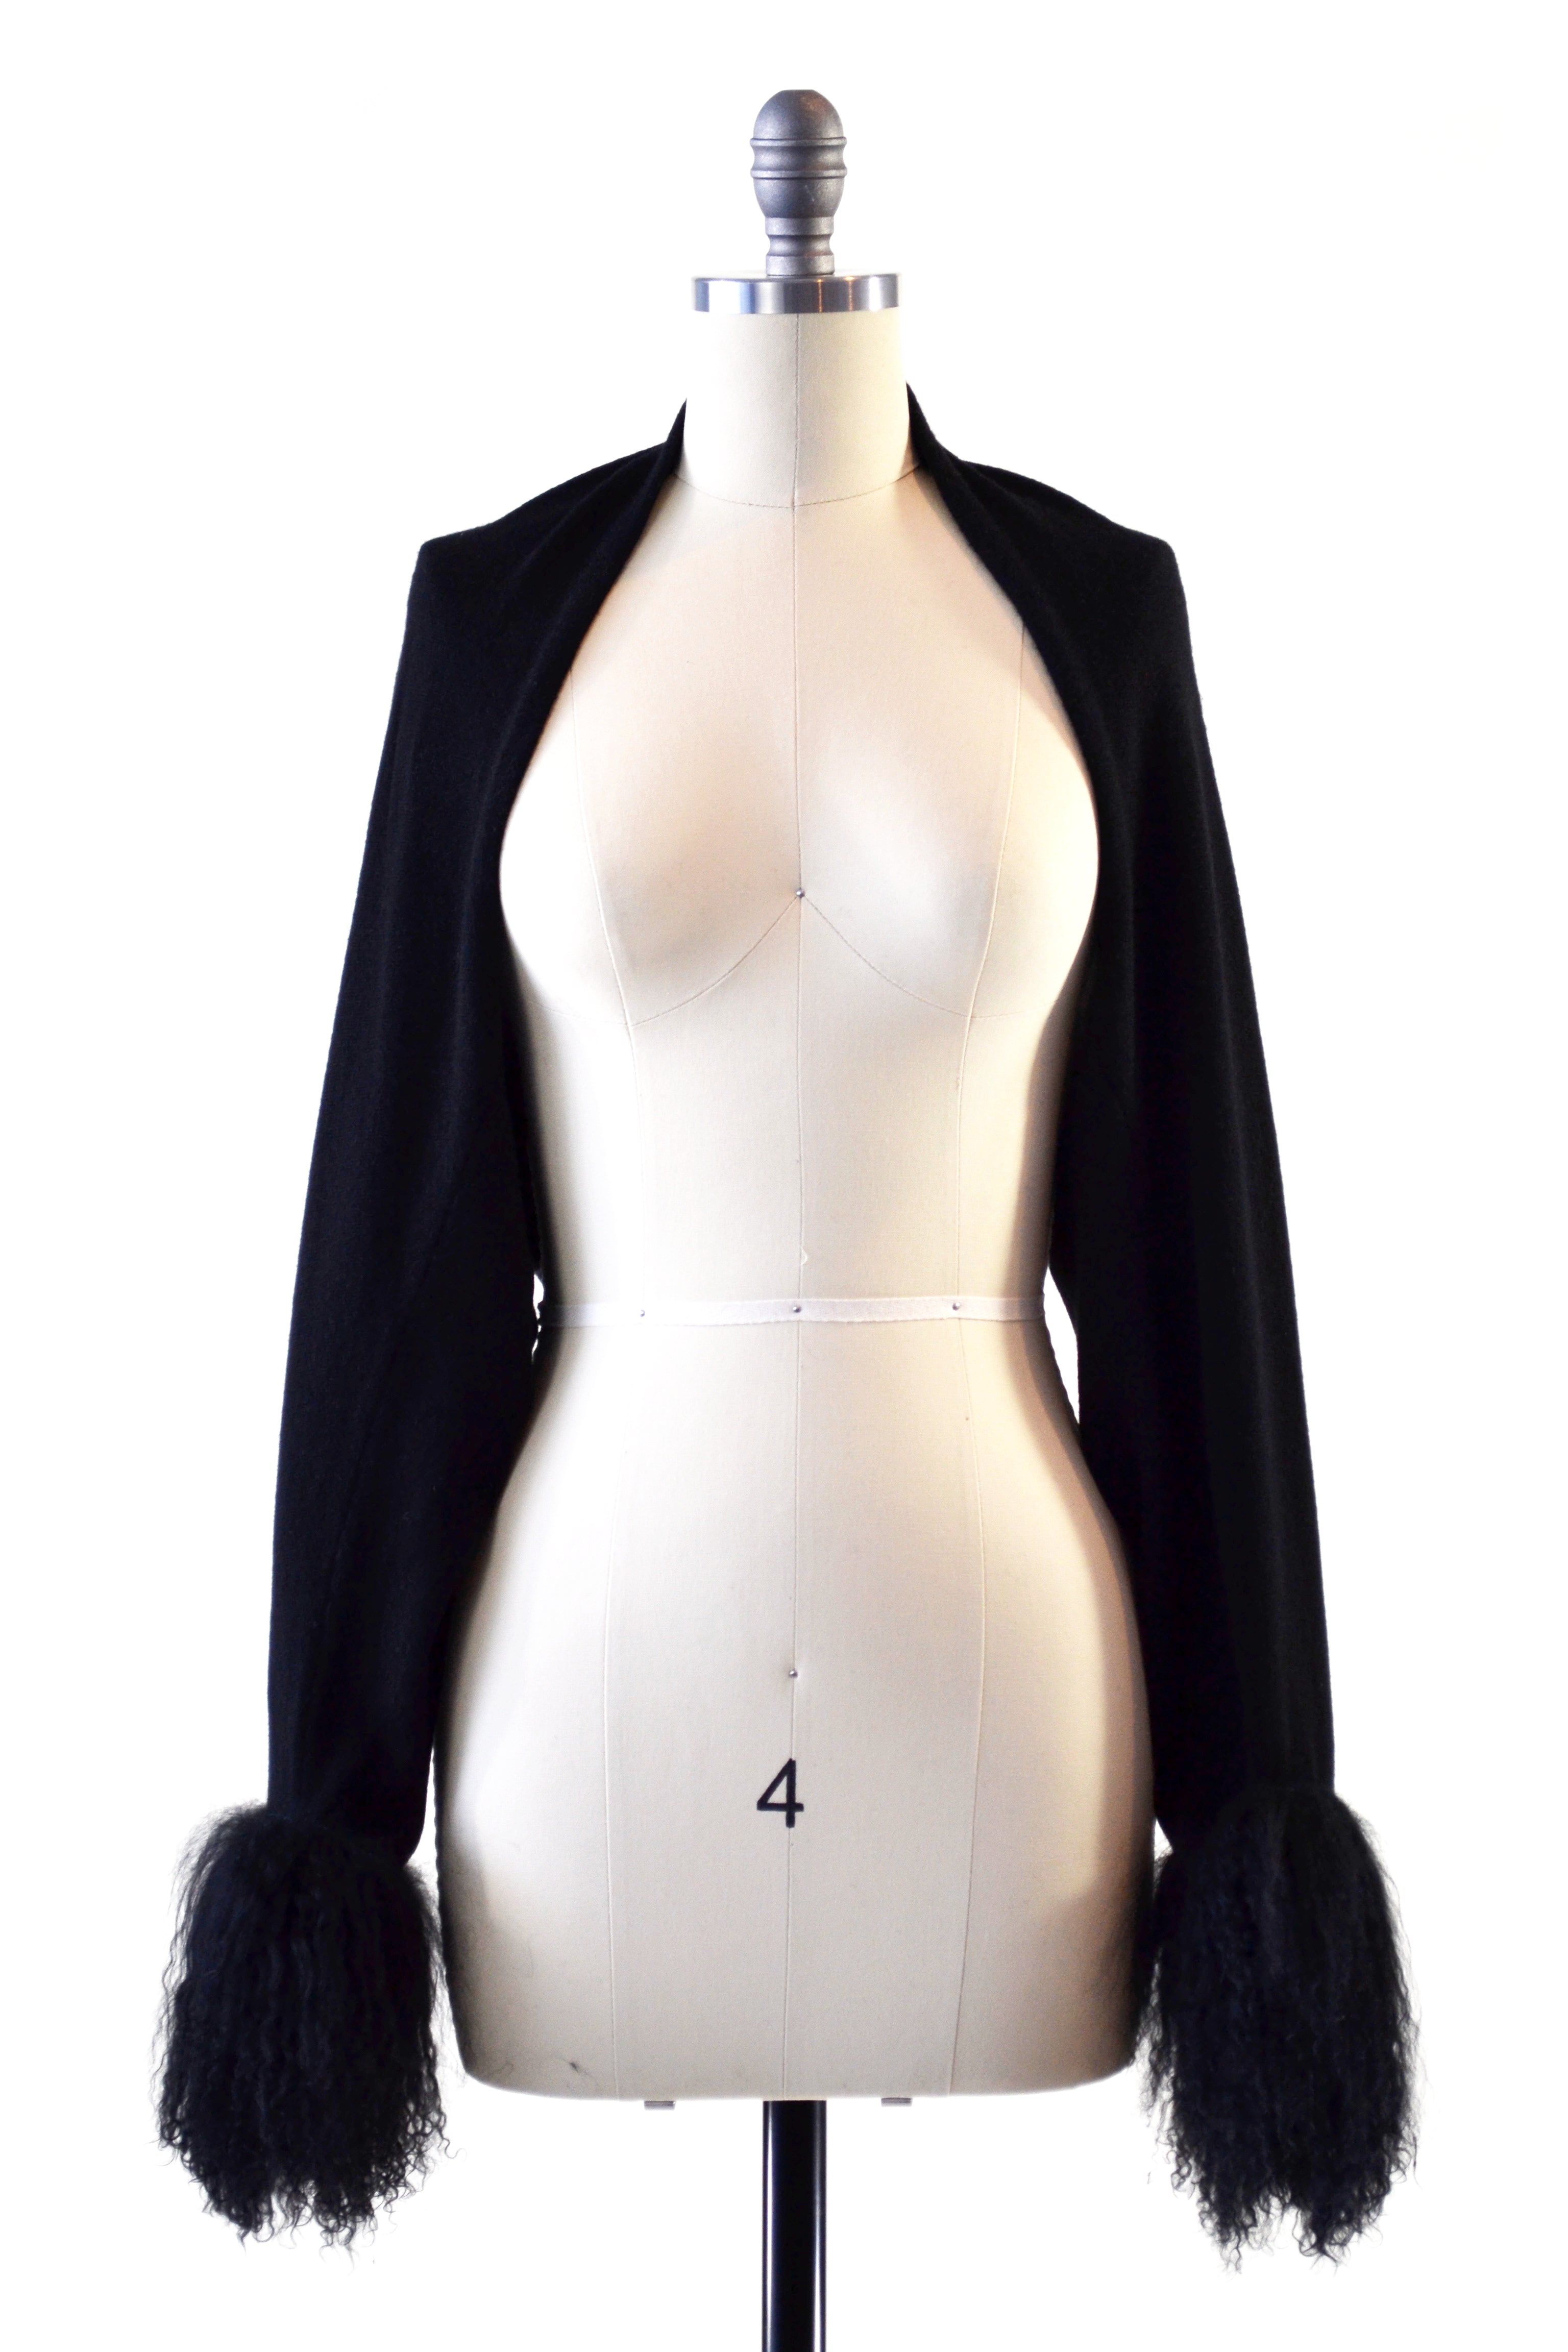 Christian Dior Cashmere Knit Shrug Bolero Jacket Black